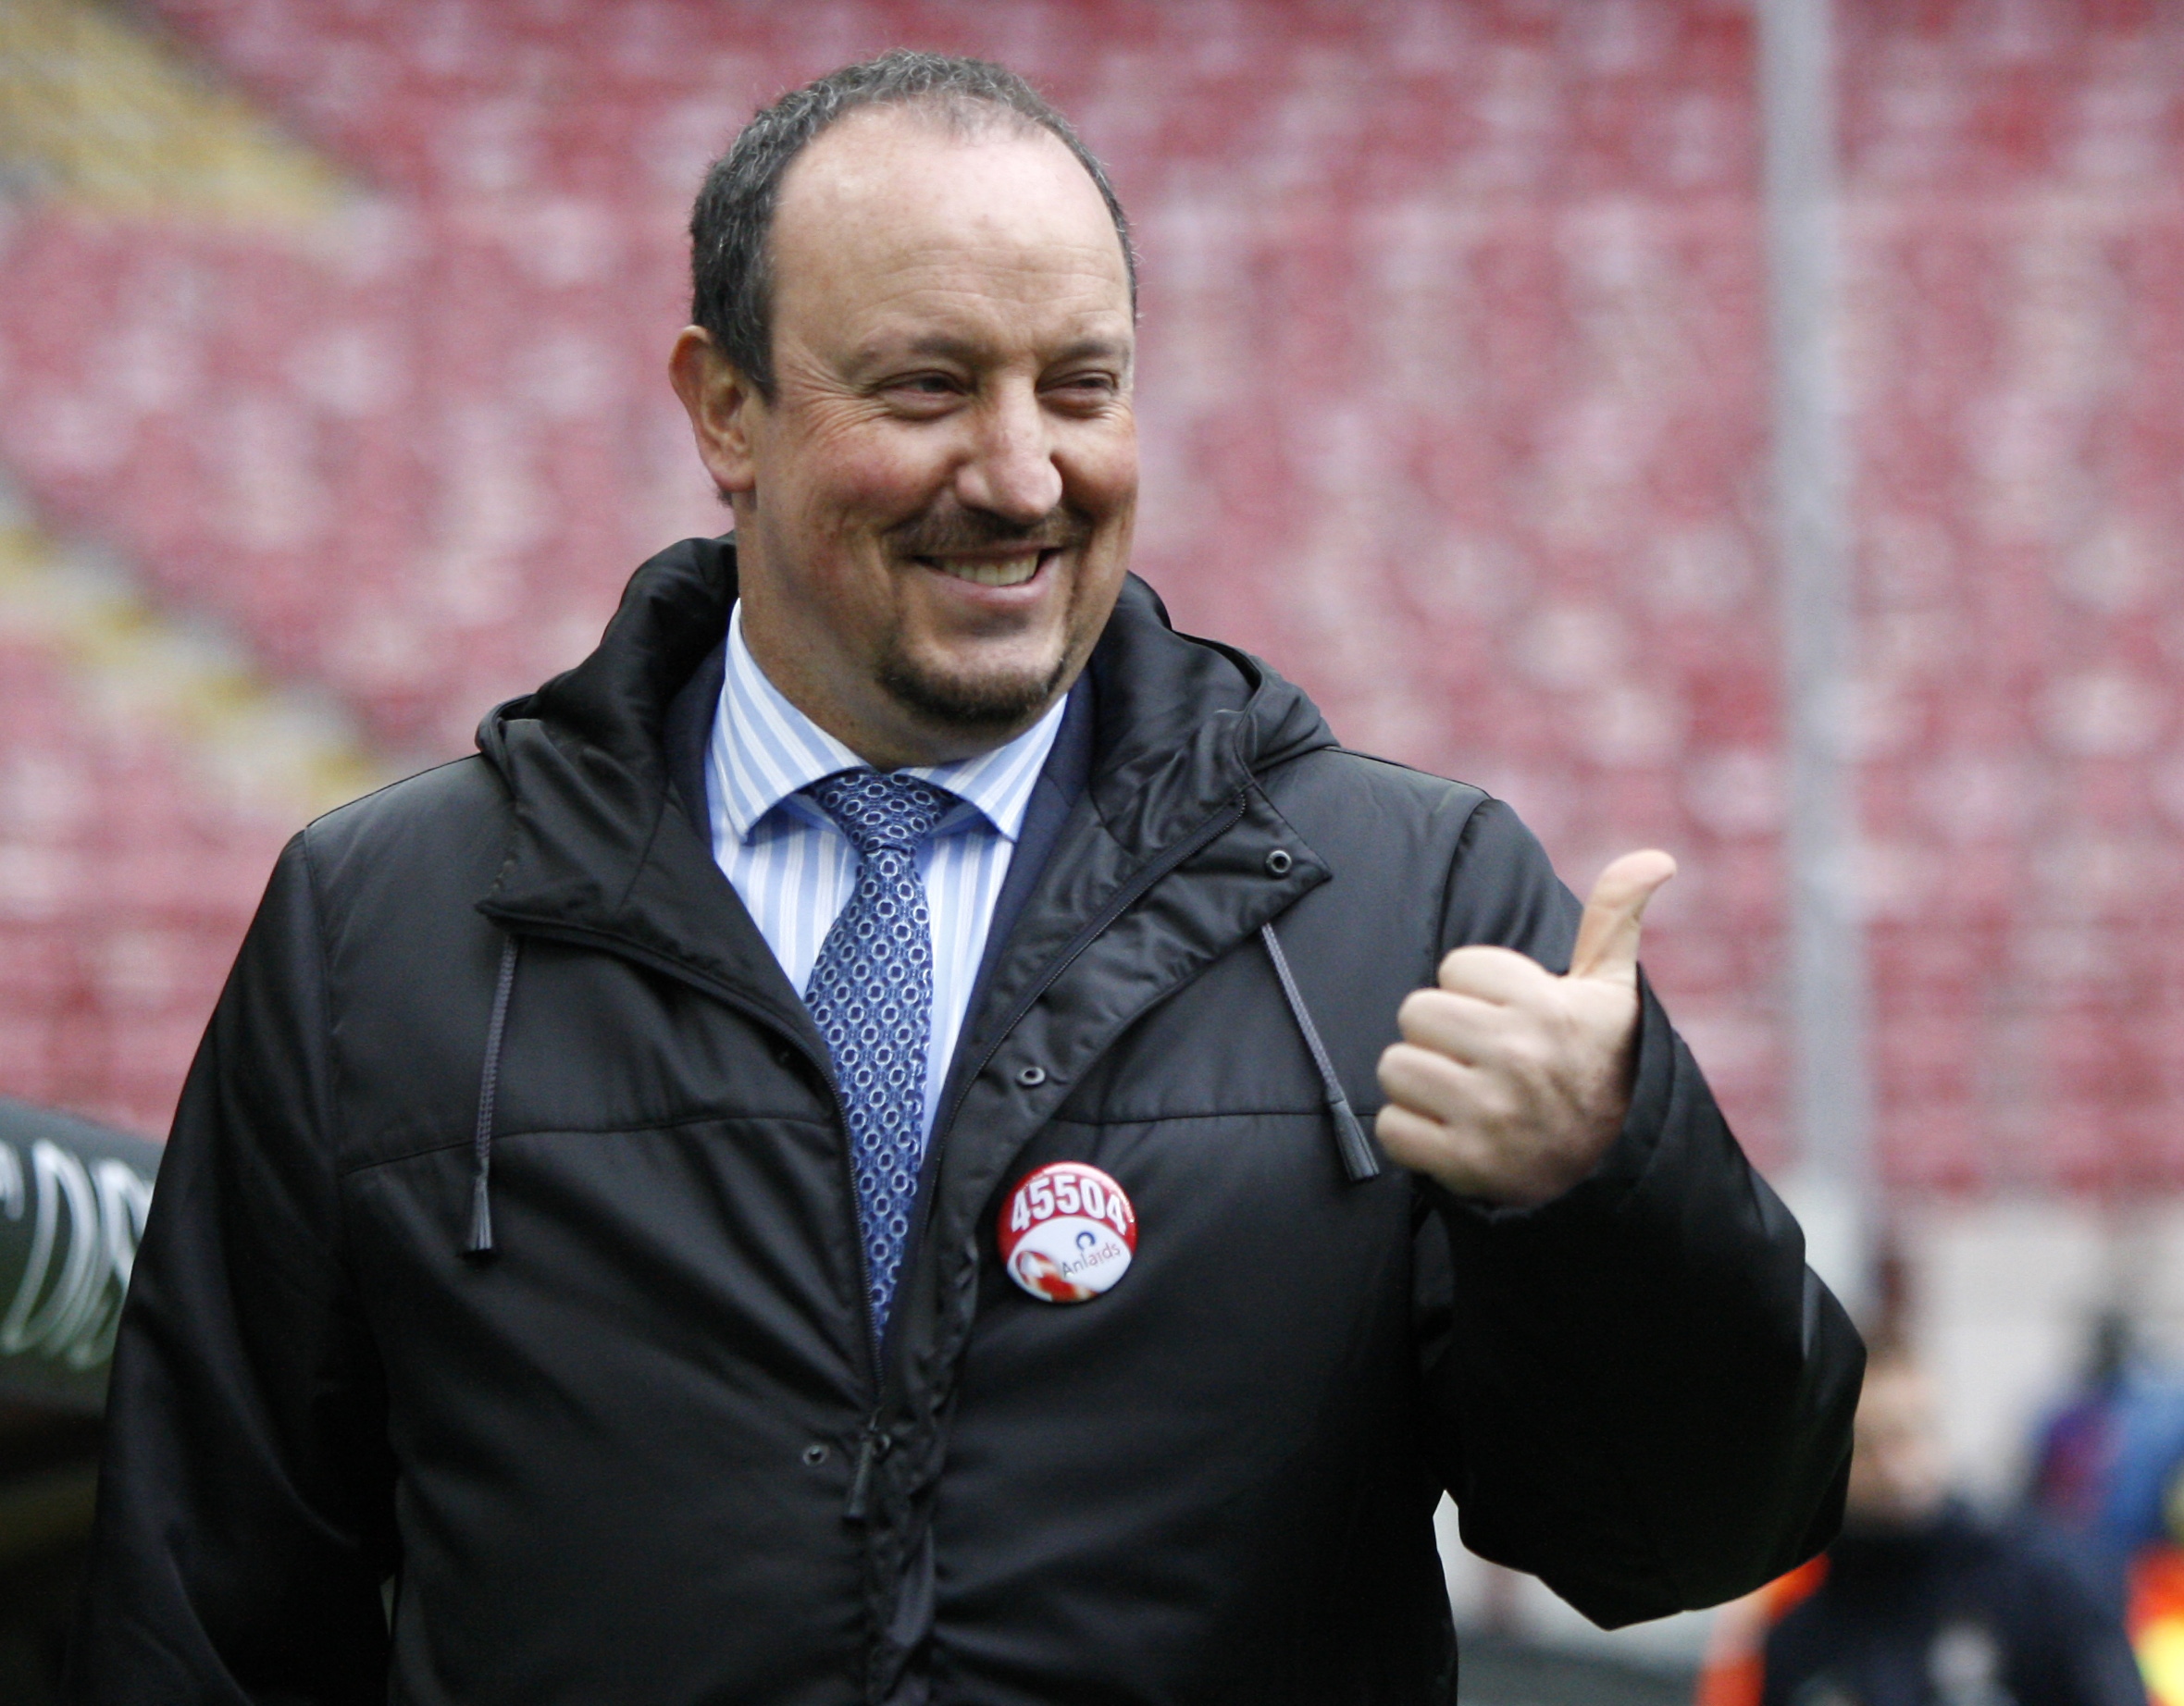 Chelsea uppges ha tackat nej till Benitez krav på ett 18-månaders kontrakt.